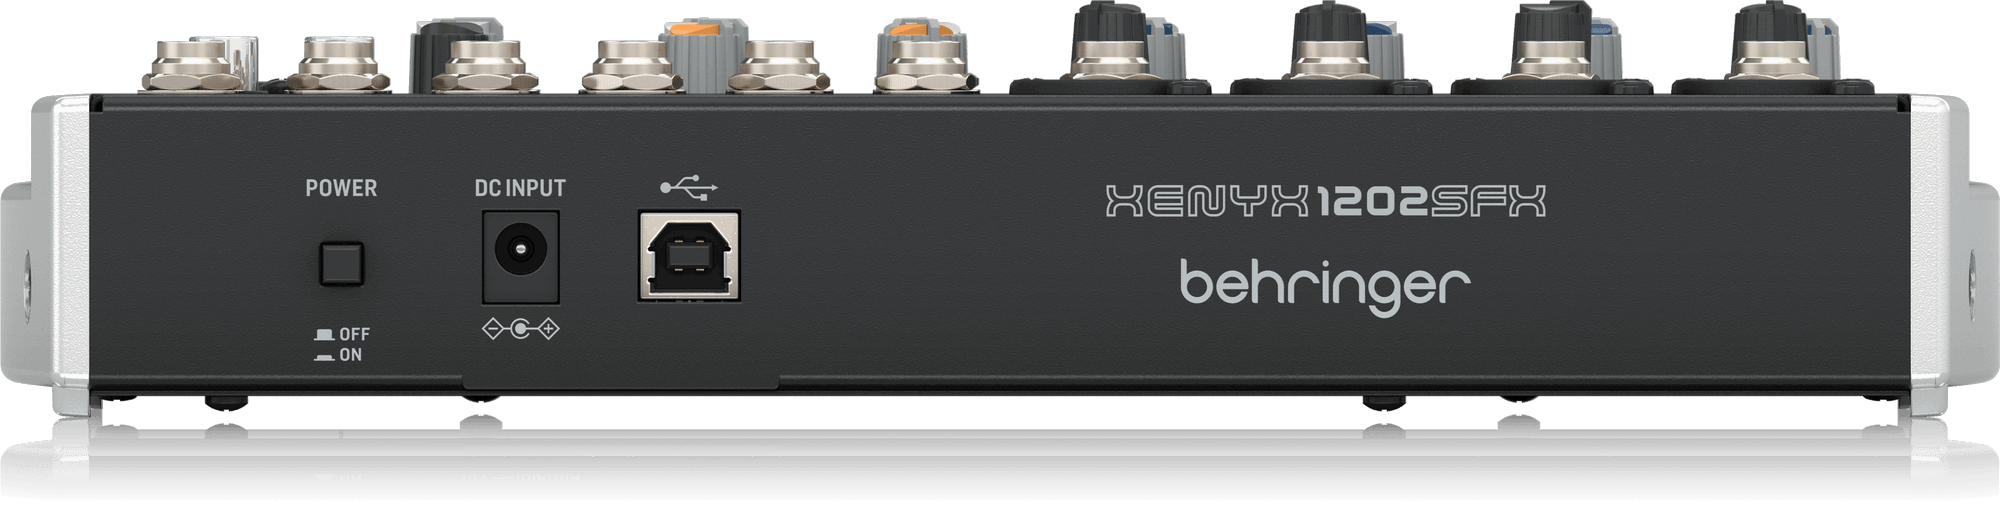 Behringer XENYX 1202SFX Premium Analog 12-Input Mixer with USB Audio Streaming Interface and Klark Teknik Effects